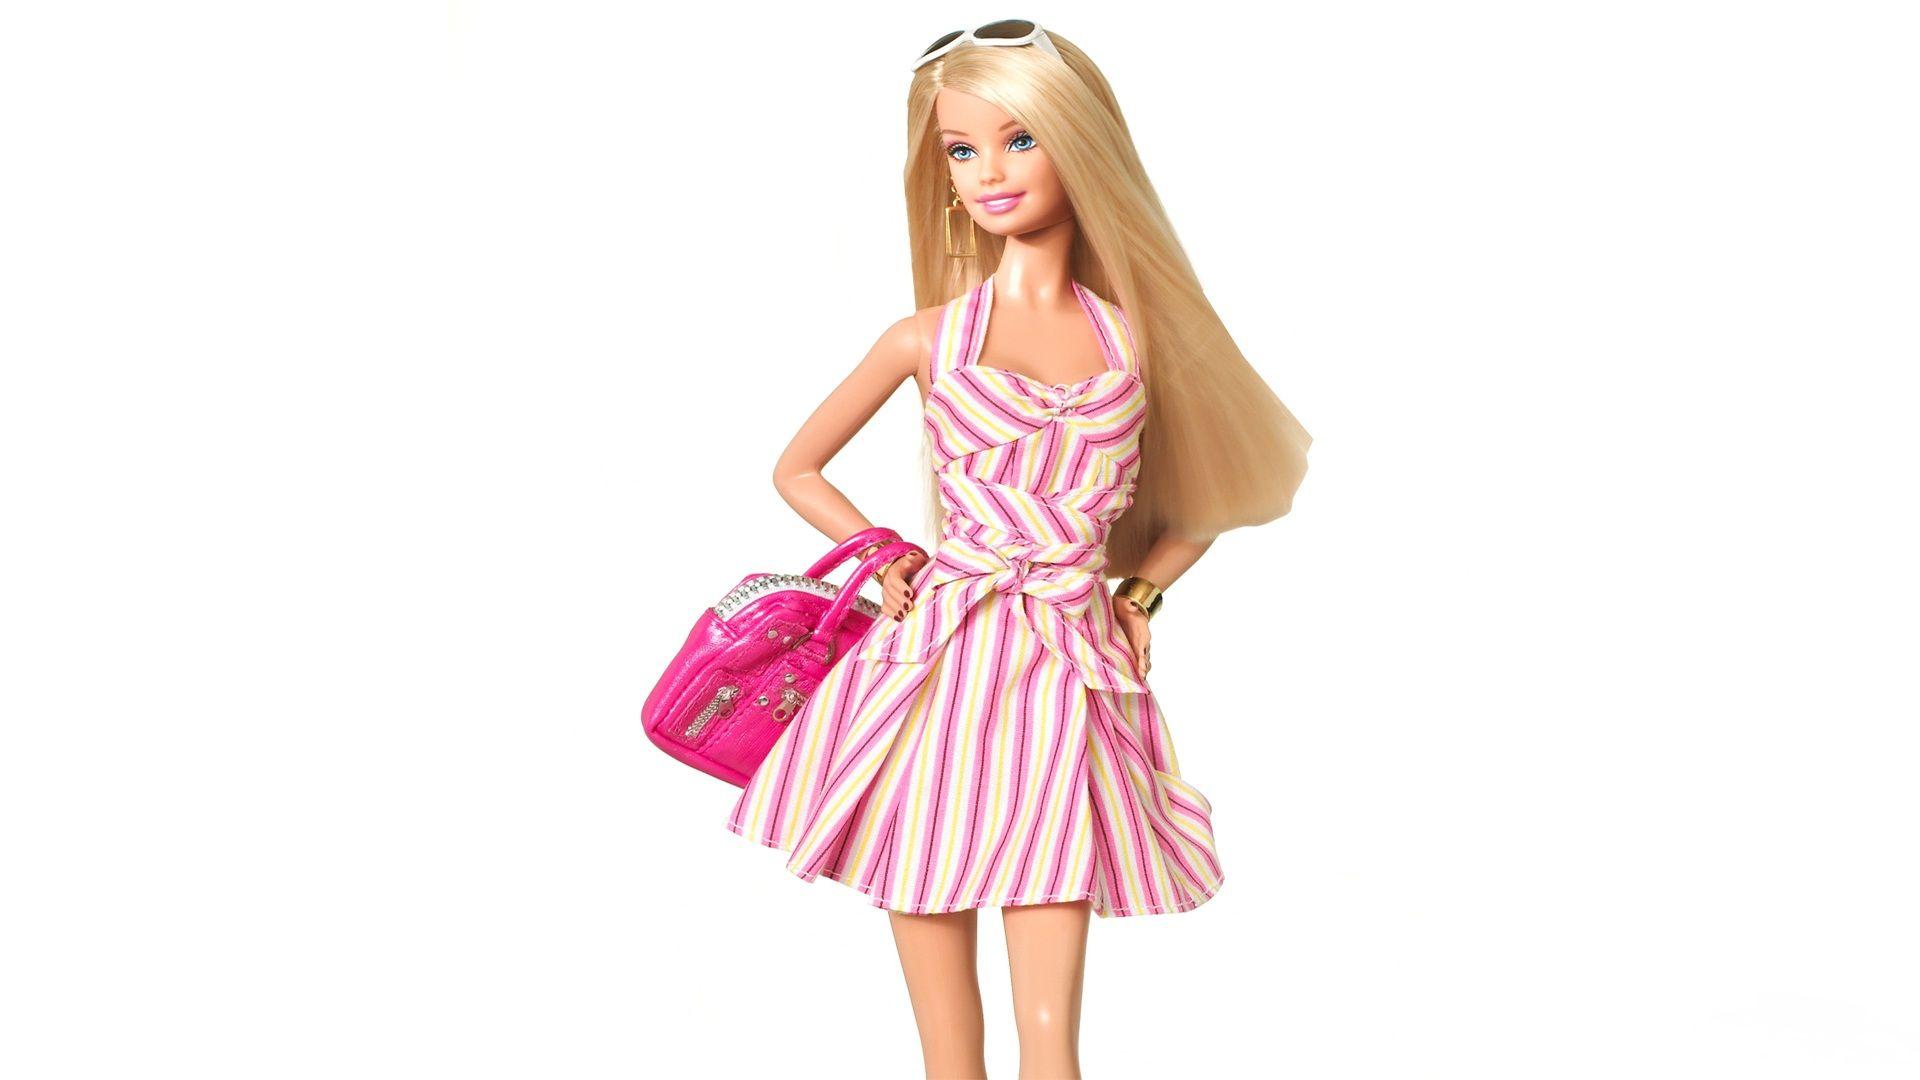 Barbie: Super Model HD Wallpaper and Background Image